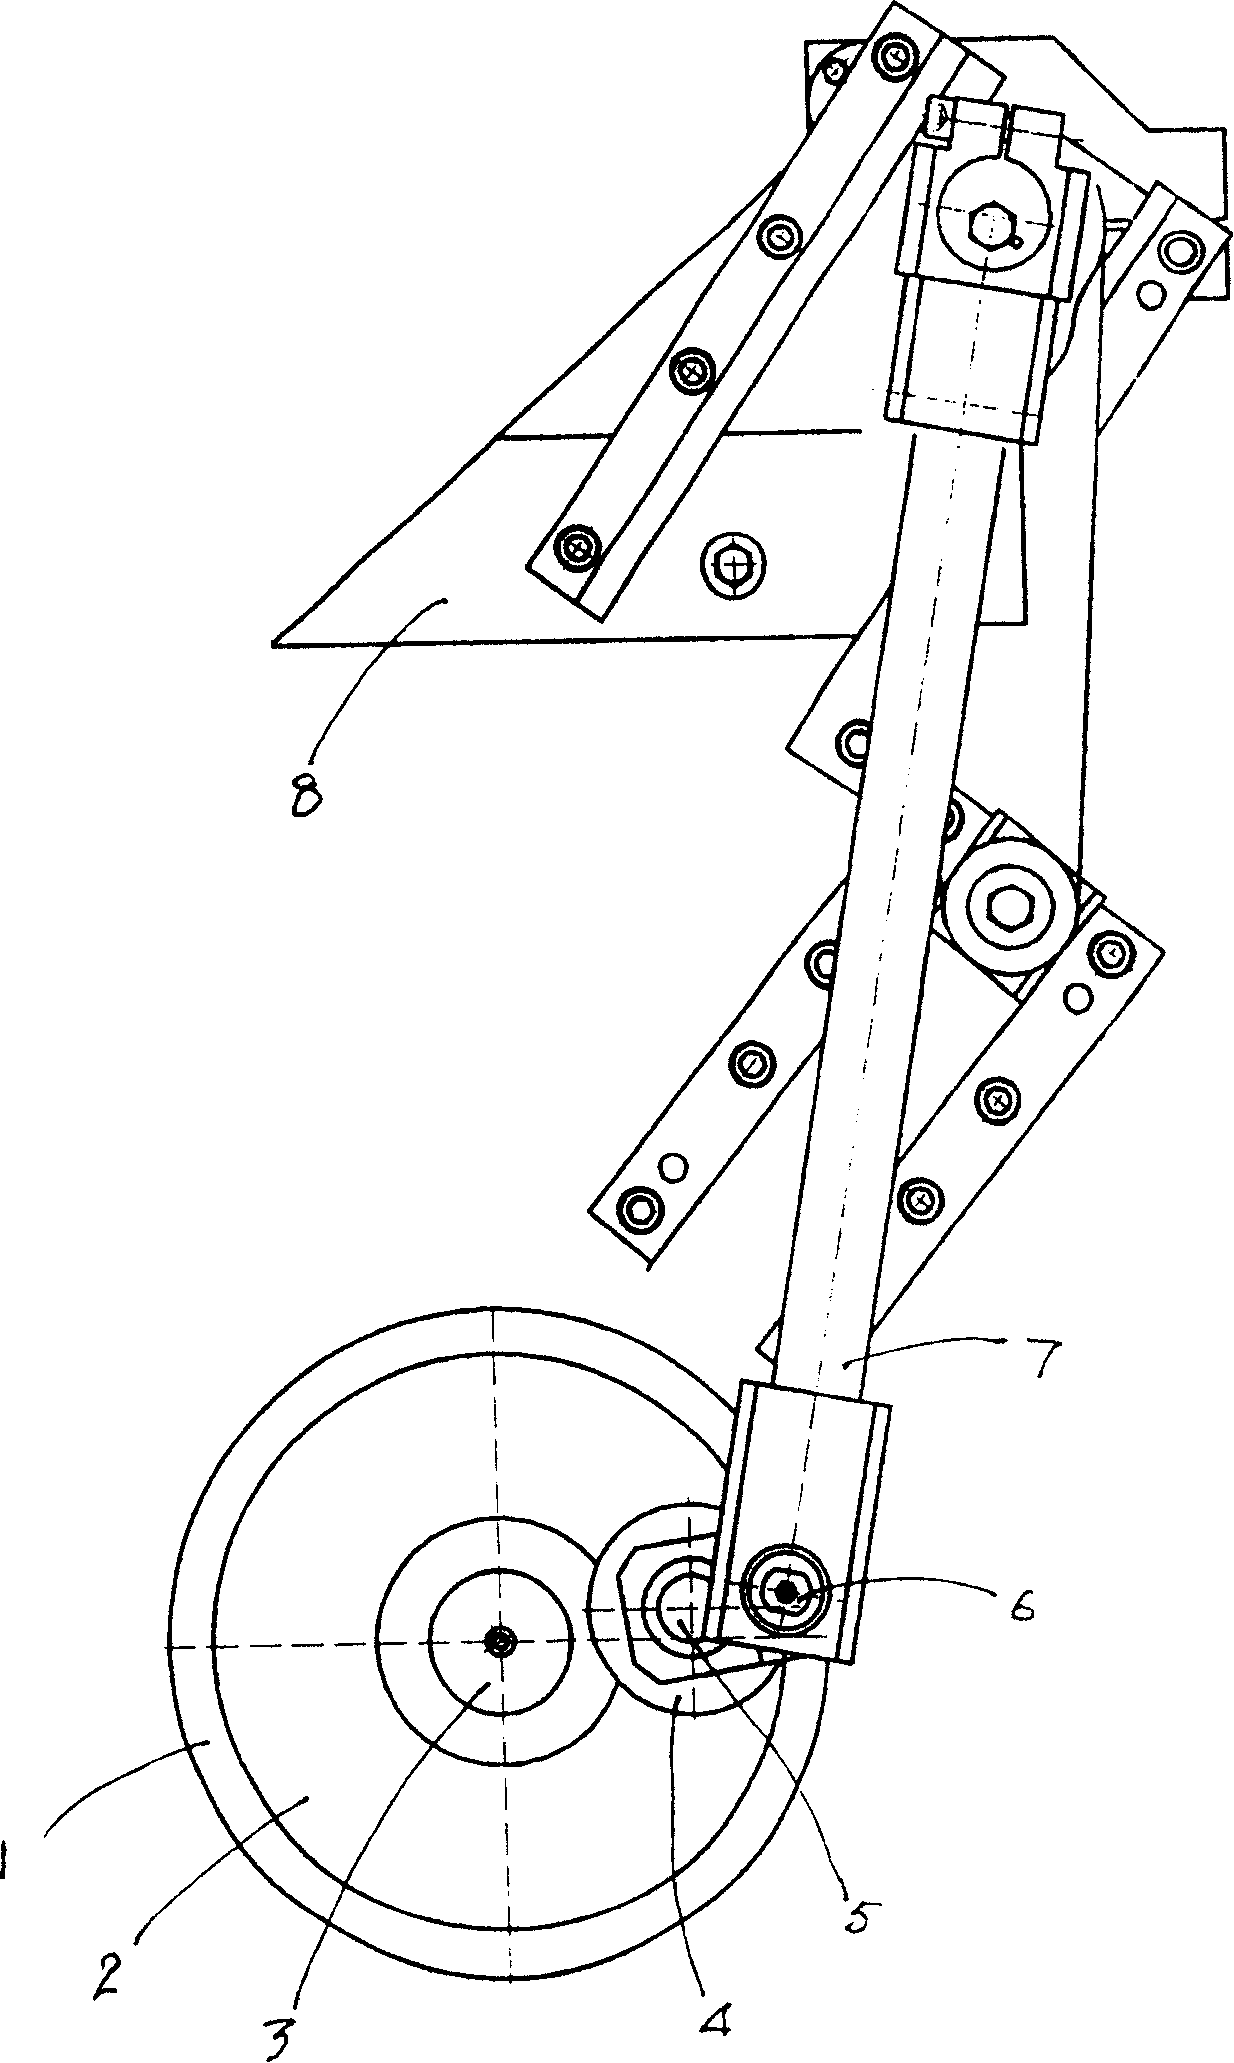 Planet cutting mechanism of three-knife trimming machine